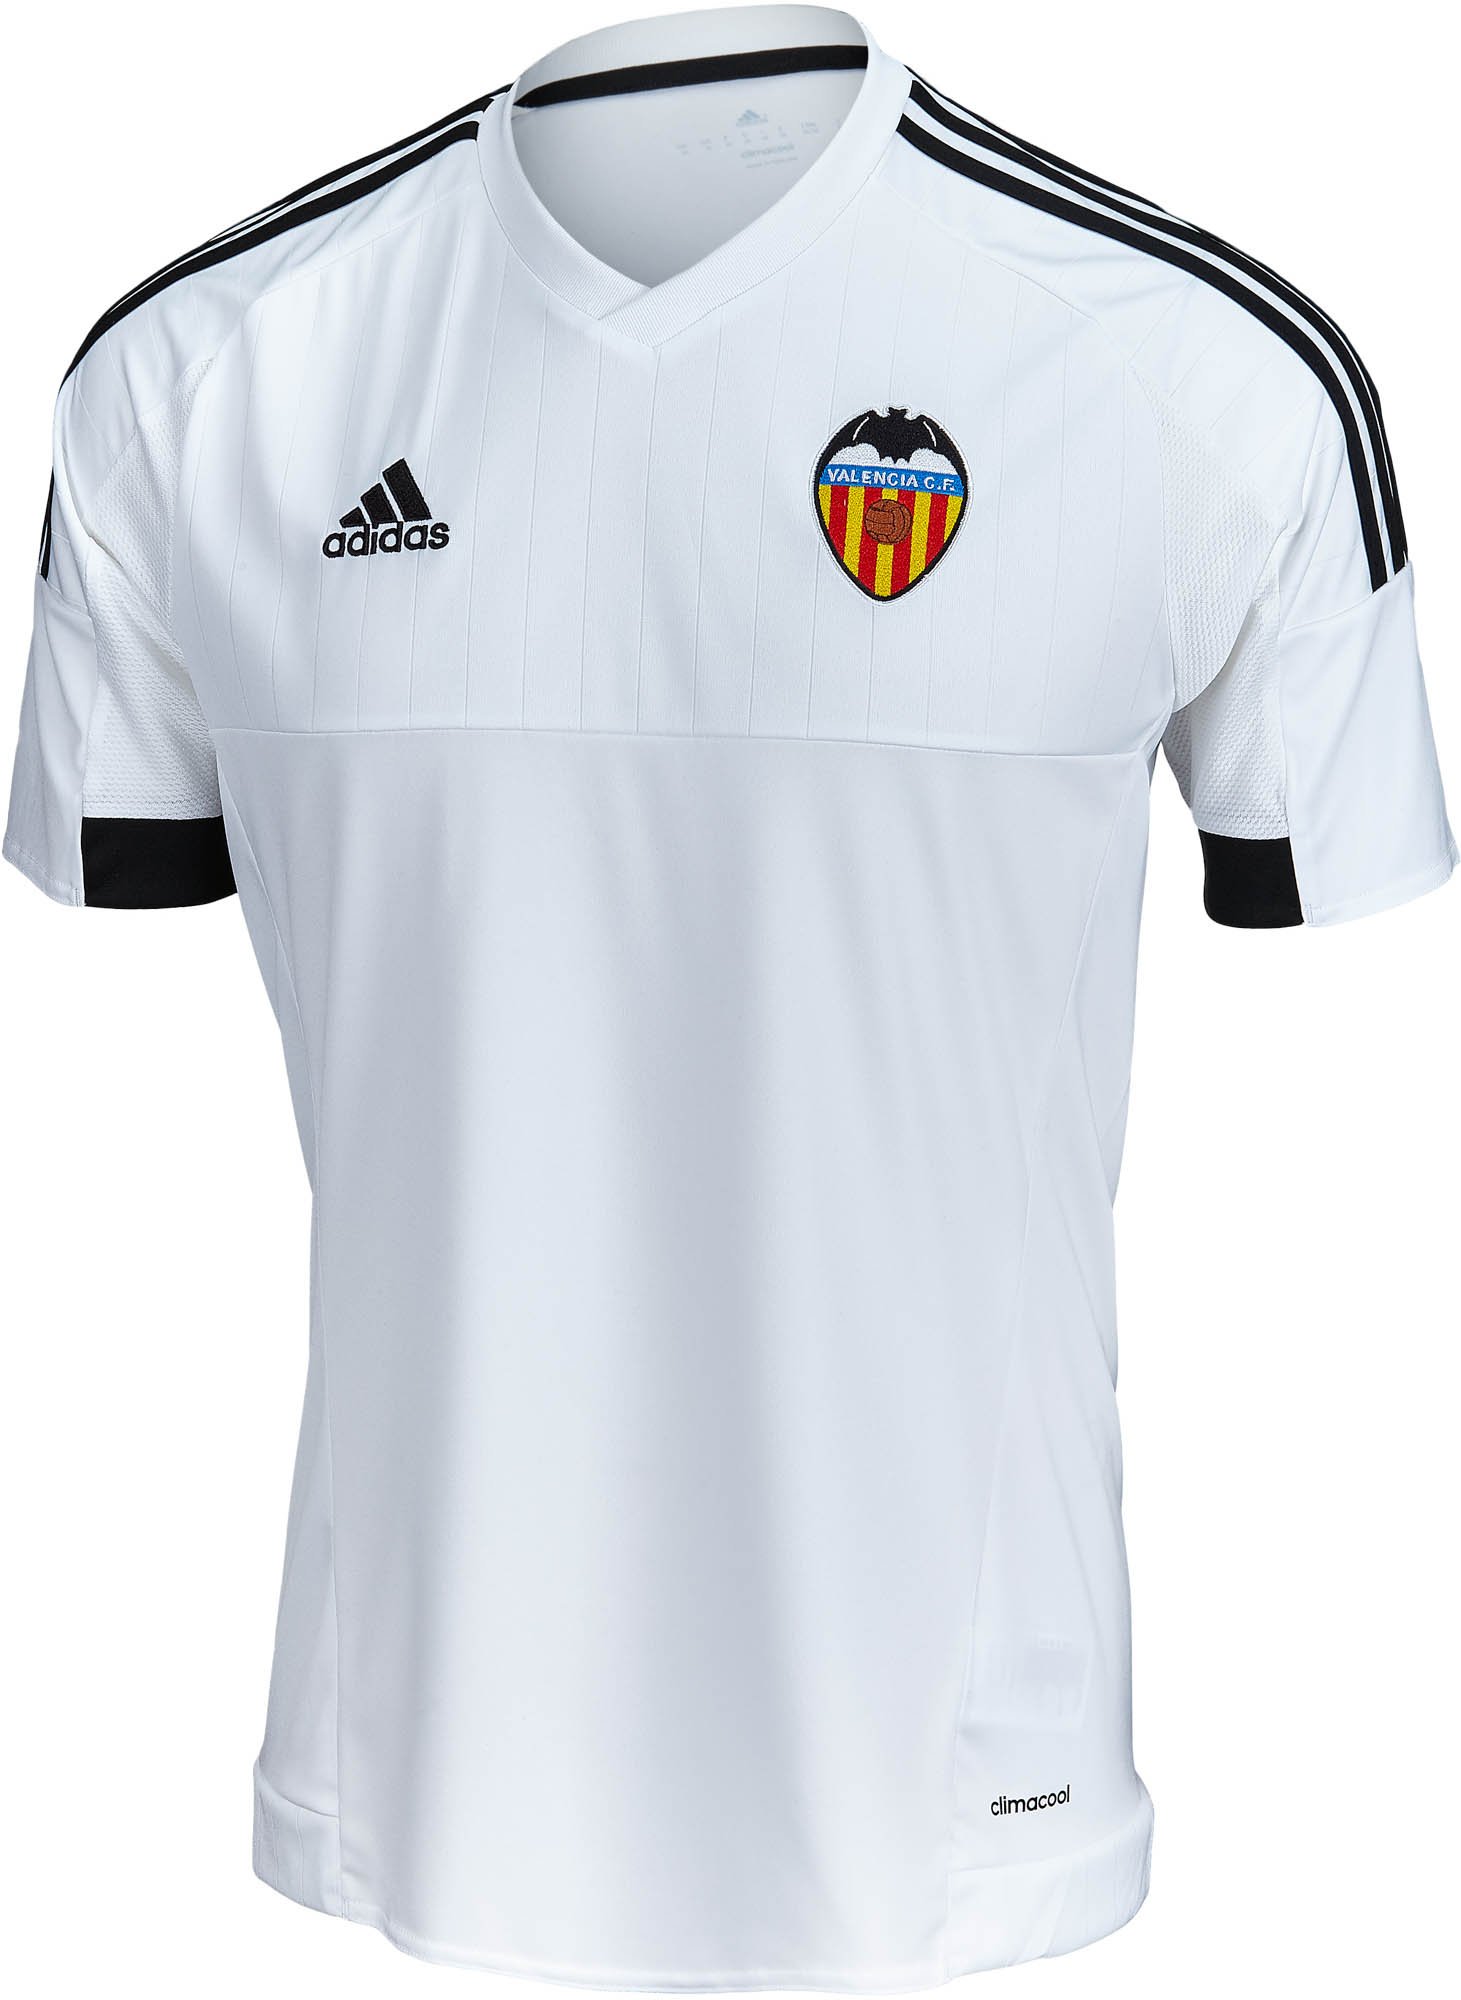 adidas Valencia Home Jersey - 2015/16 